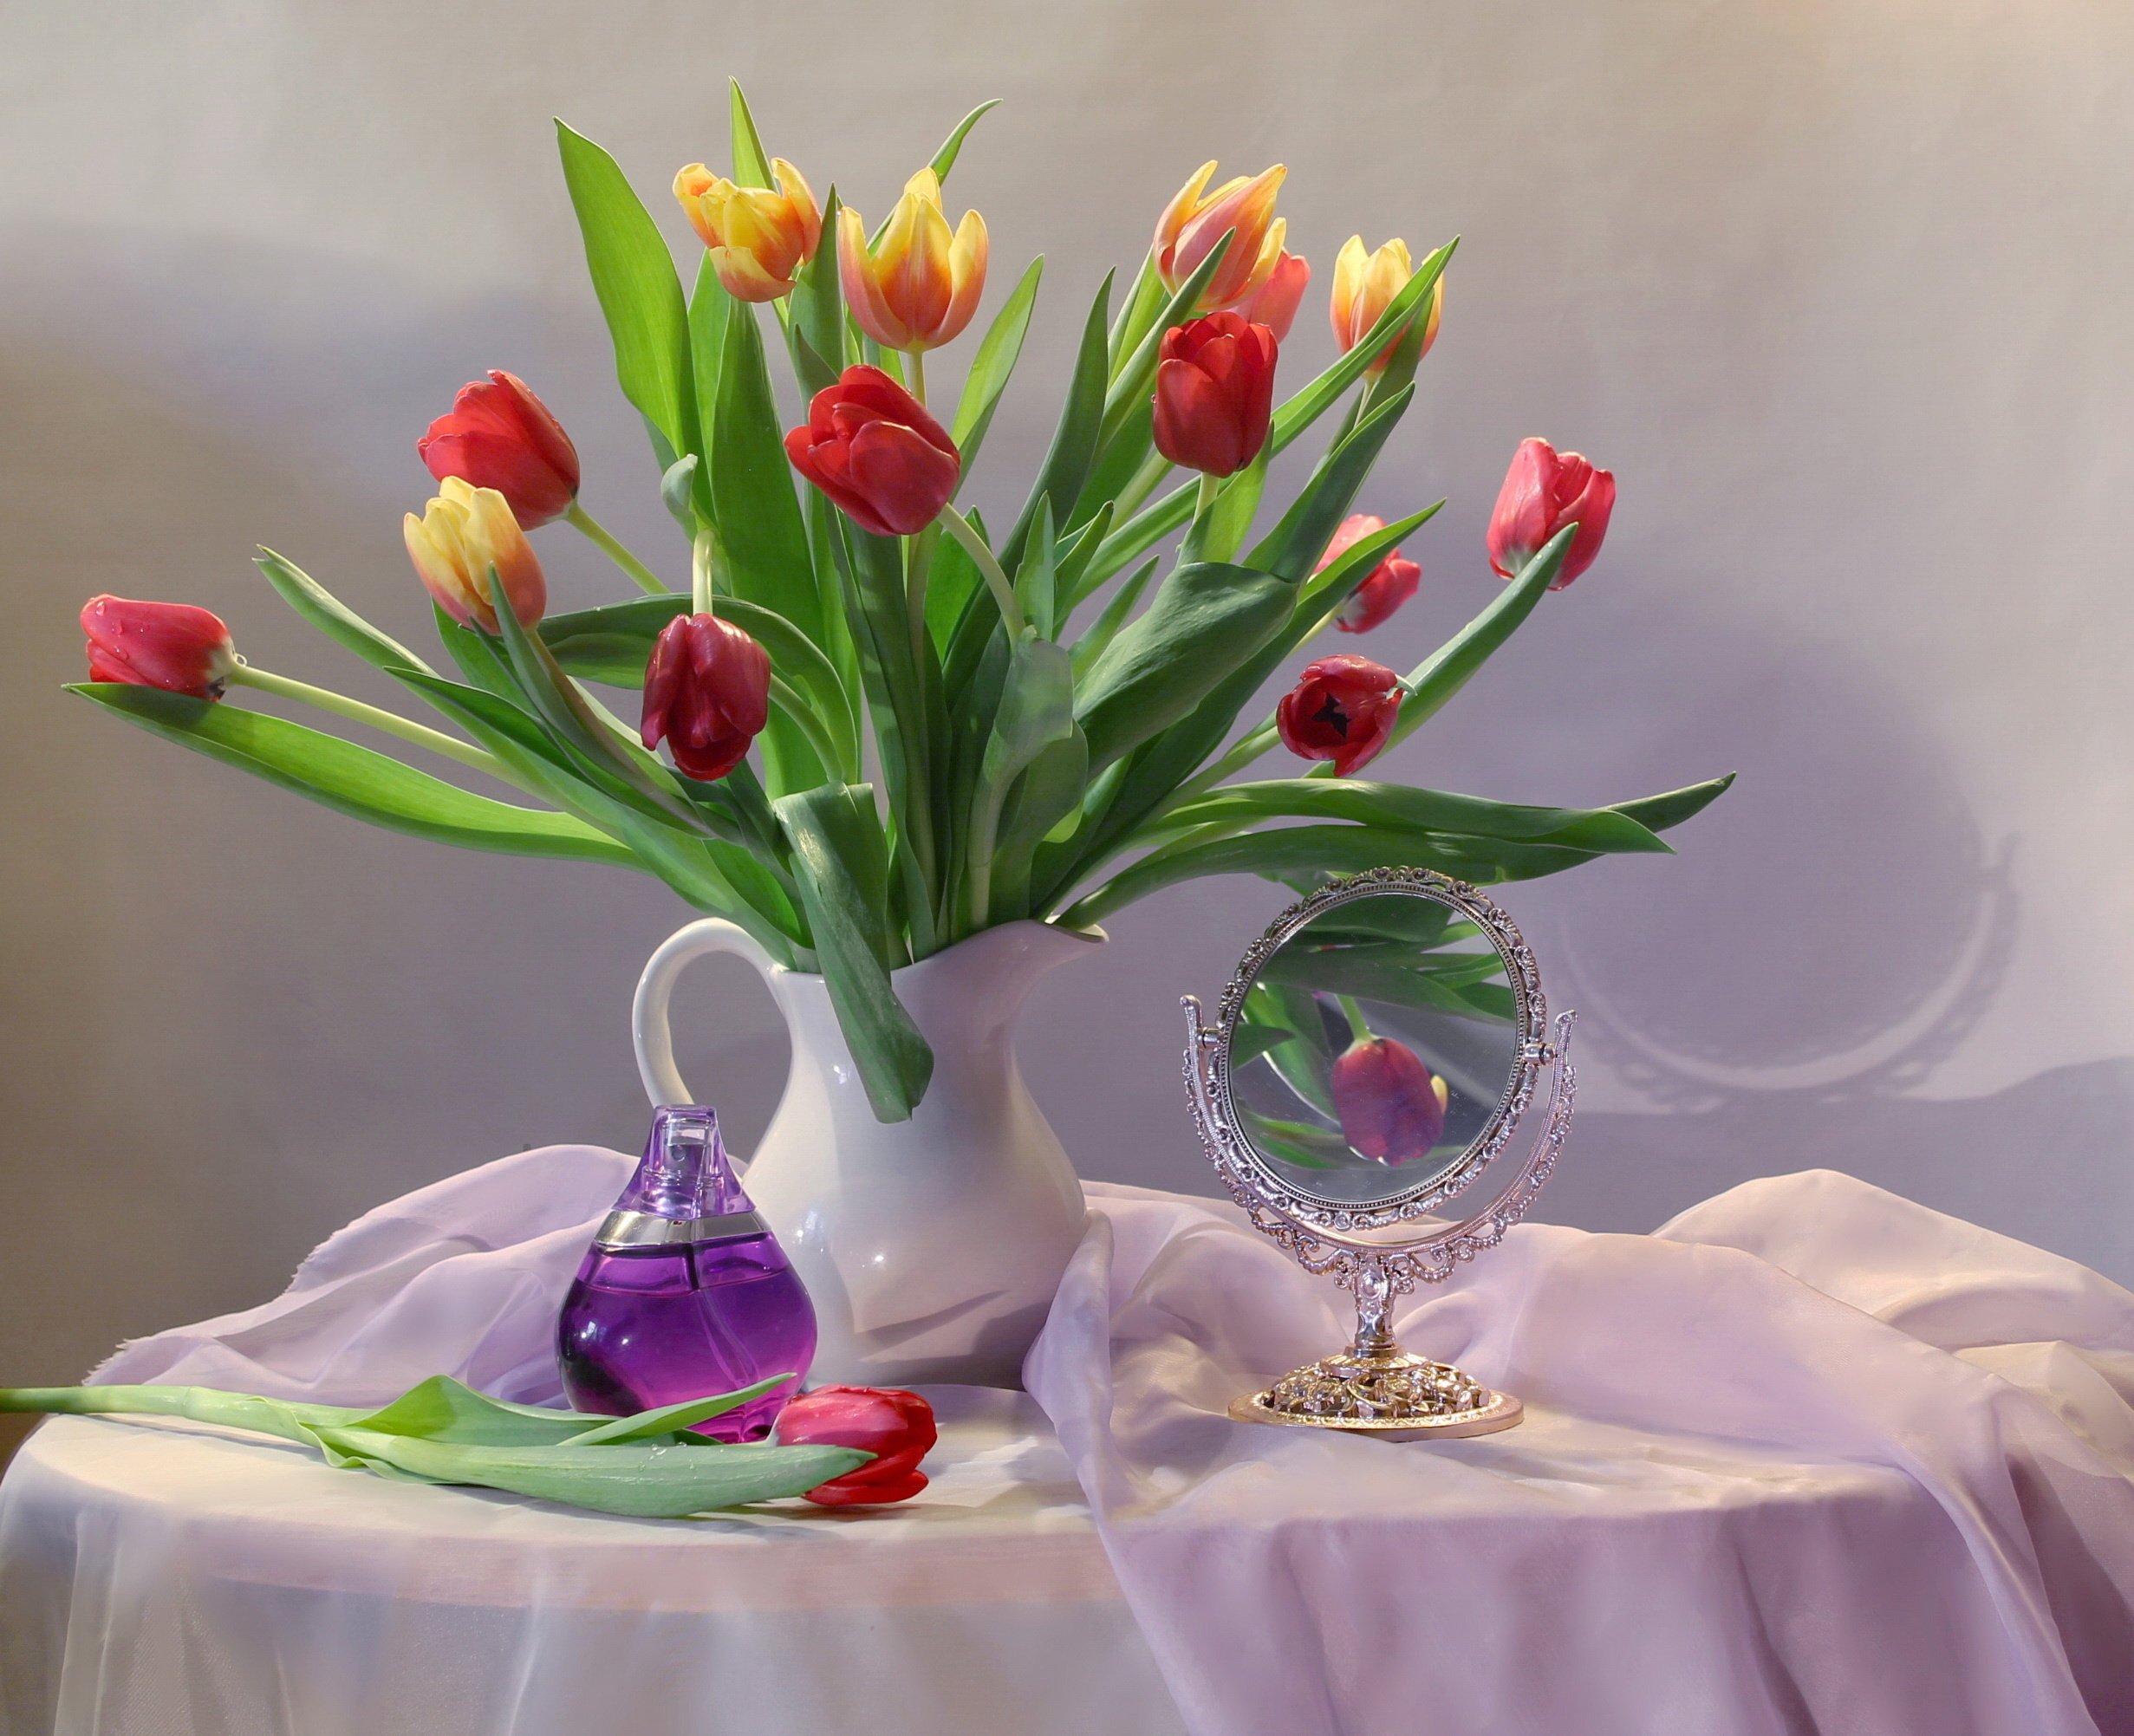 Фото тюльпаны в вазе на столе. Тюльпаны в вазе. Букет тюльпанов. Букет тюльпанов в вазе. Красивые тюльпаны в вазе.